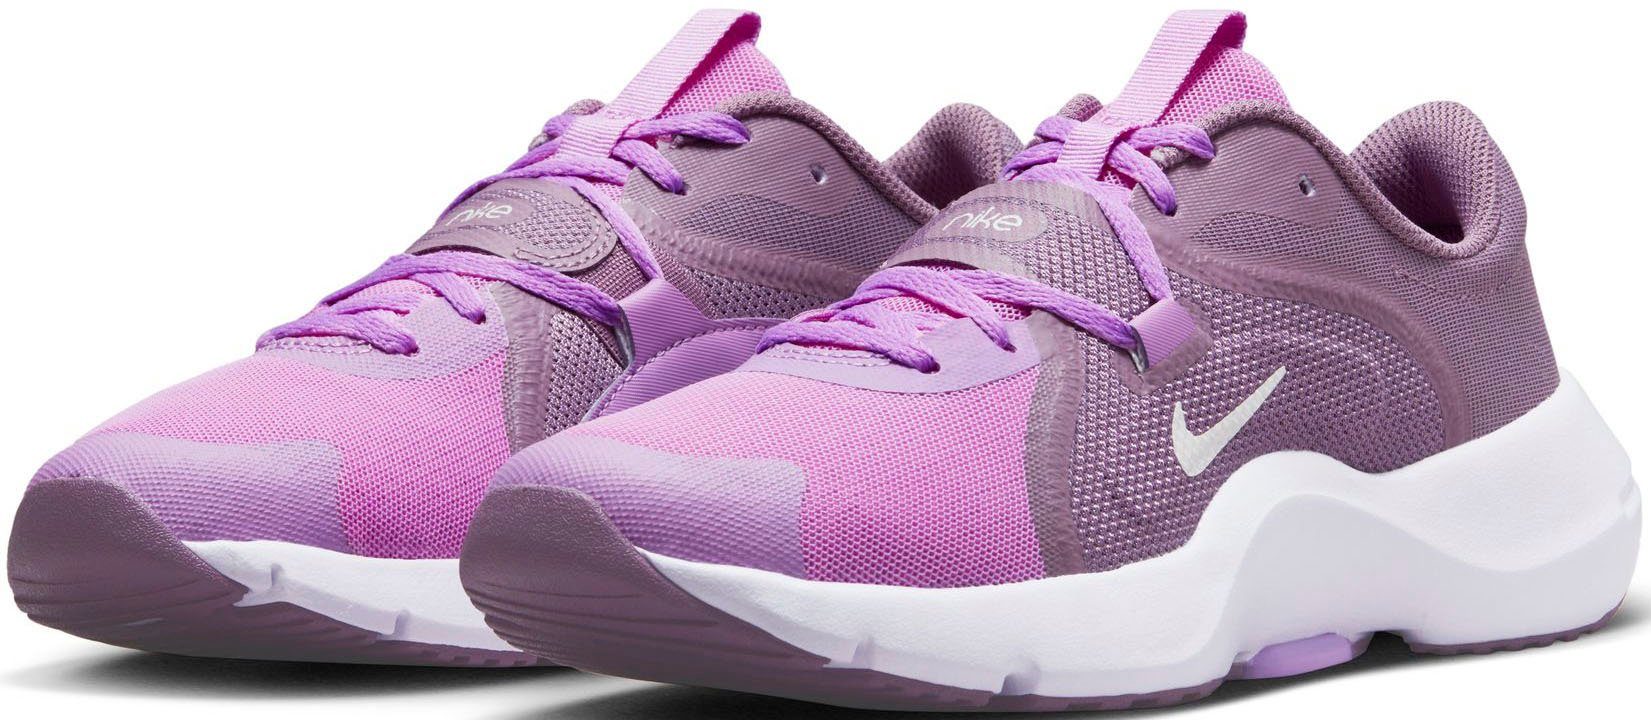 dust Nike Fitnessschuh violet TR In-Season 13